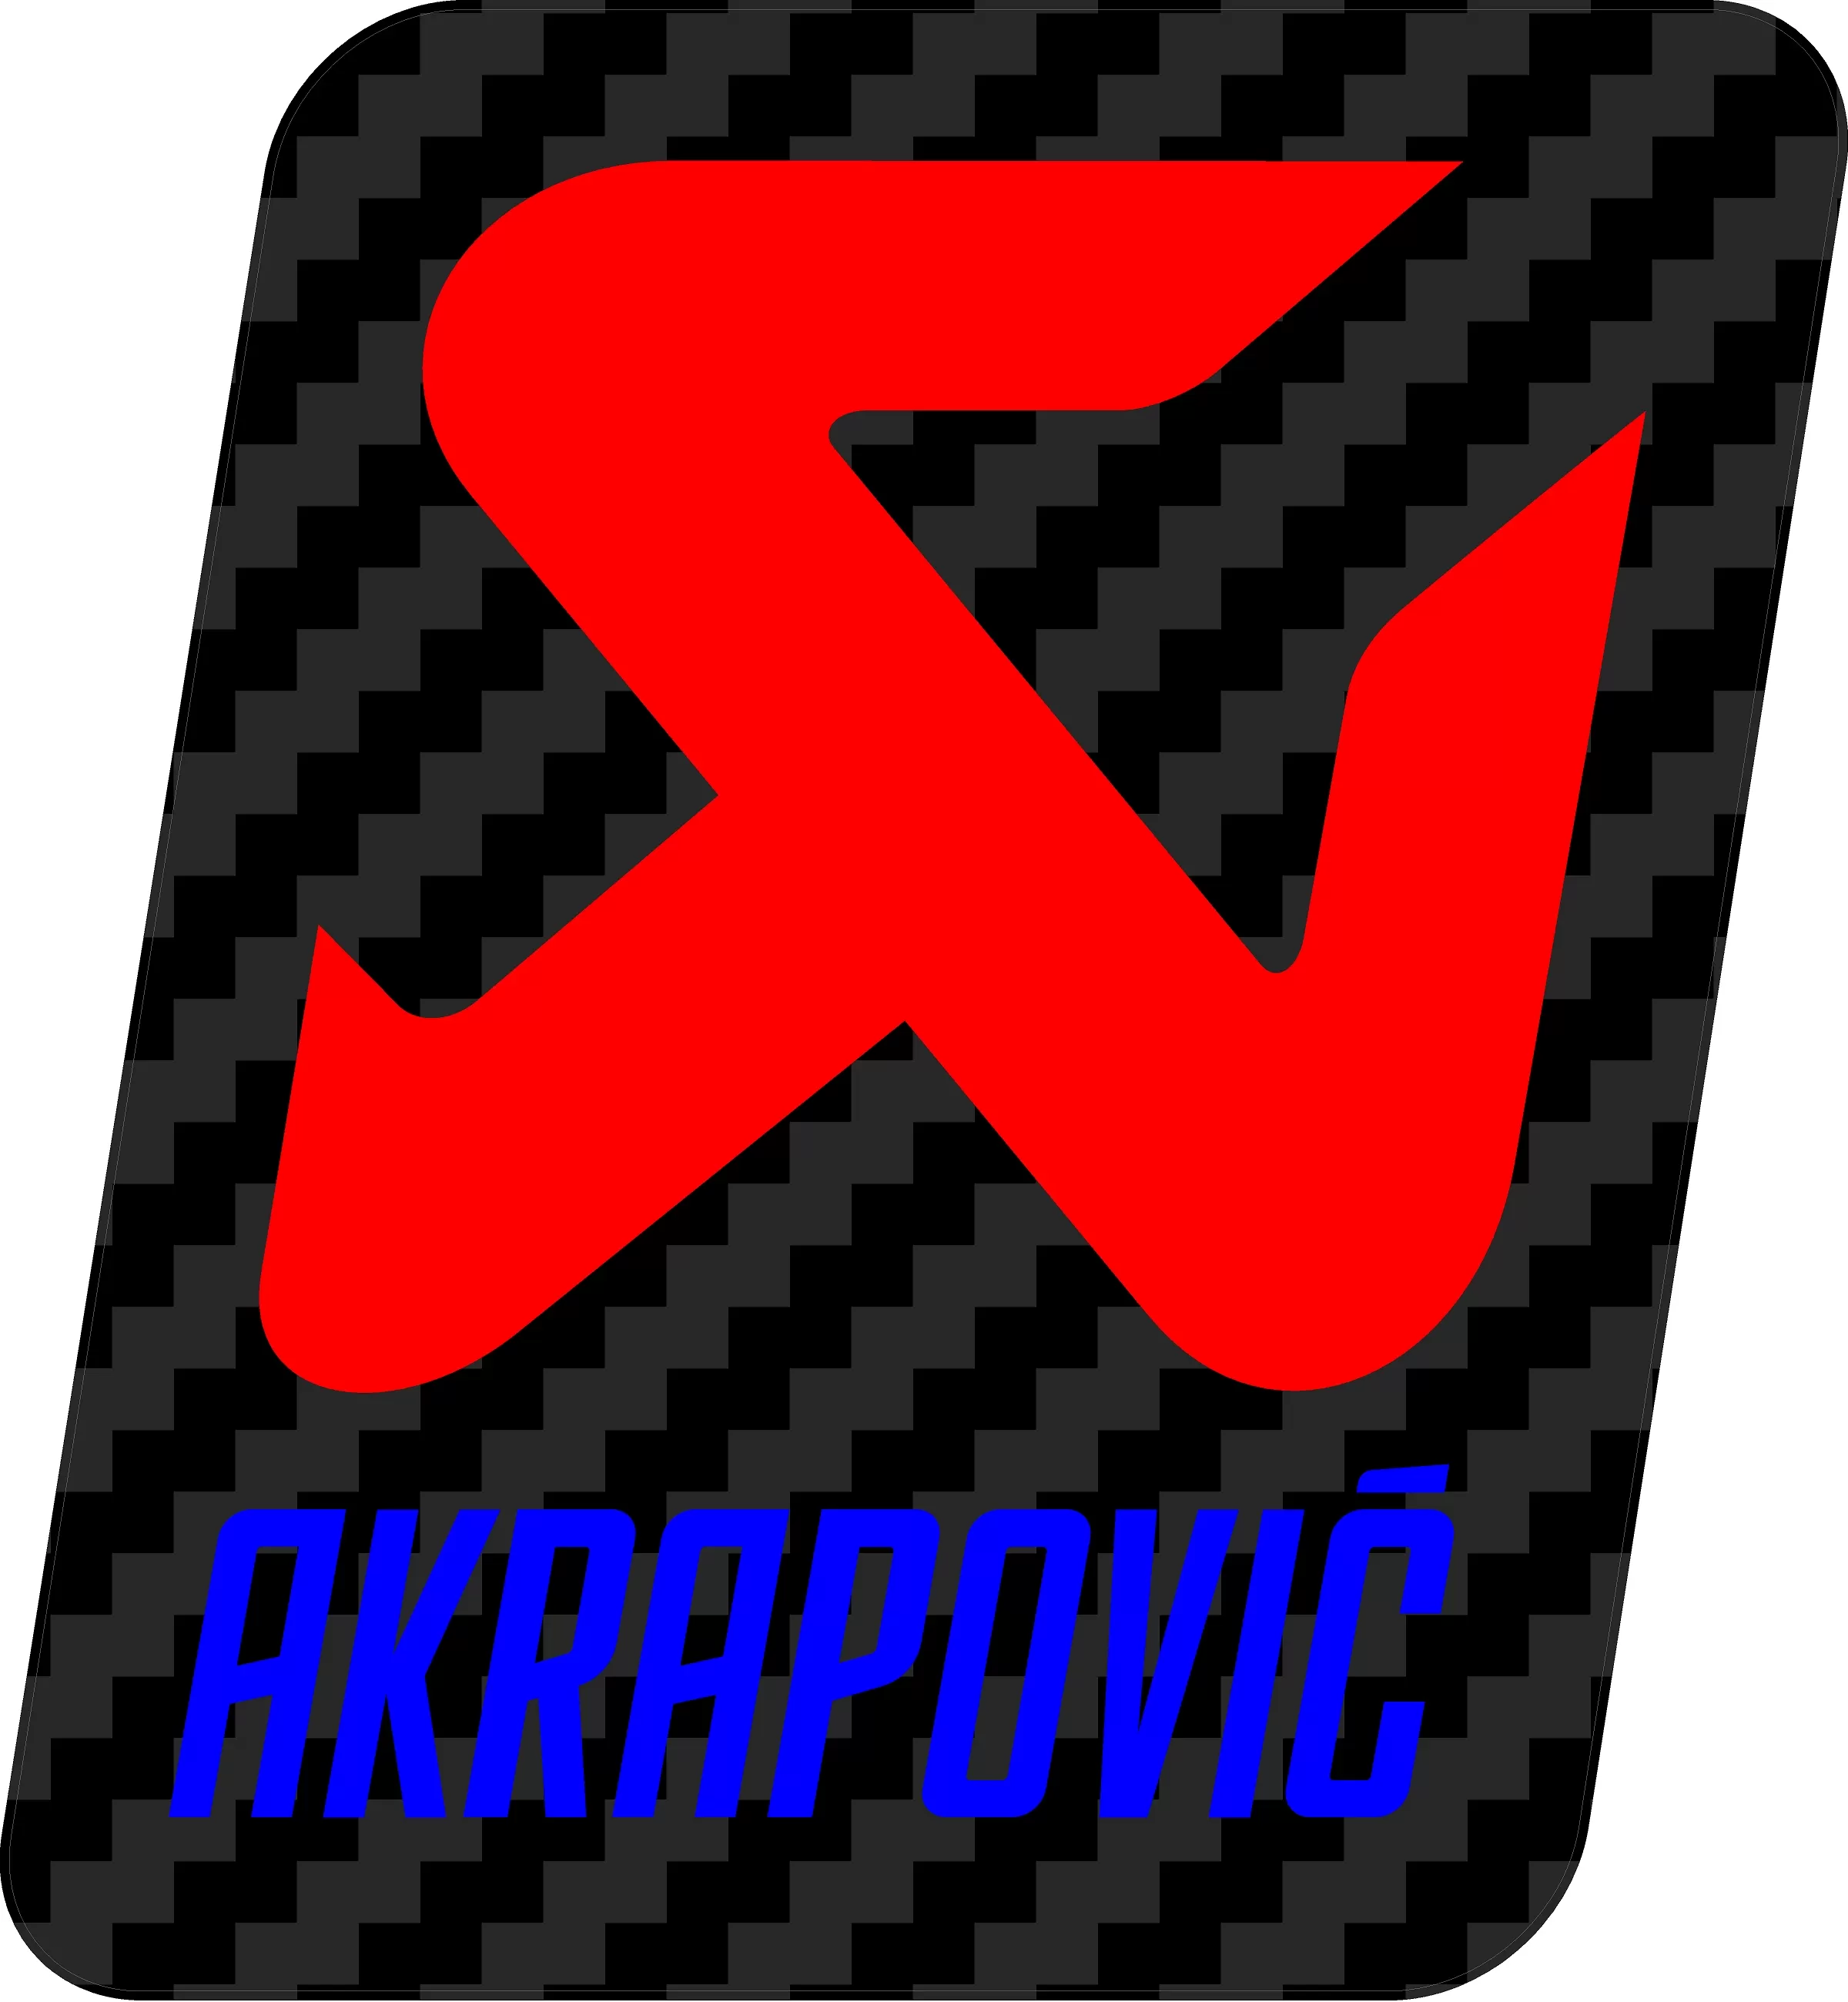 Autocollant Akrapovic - Design